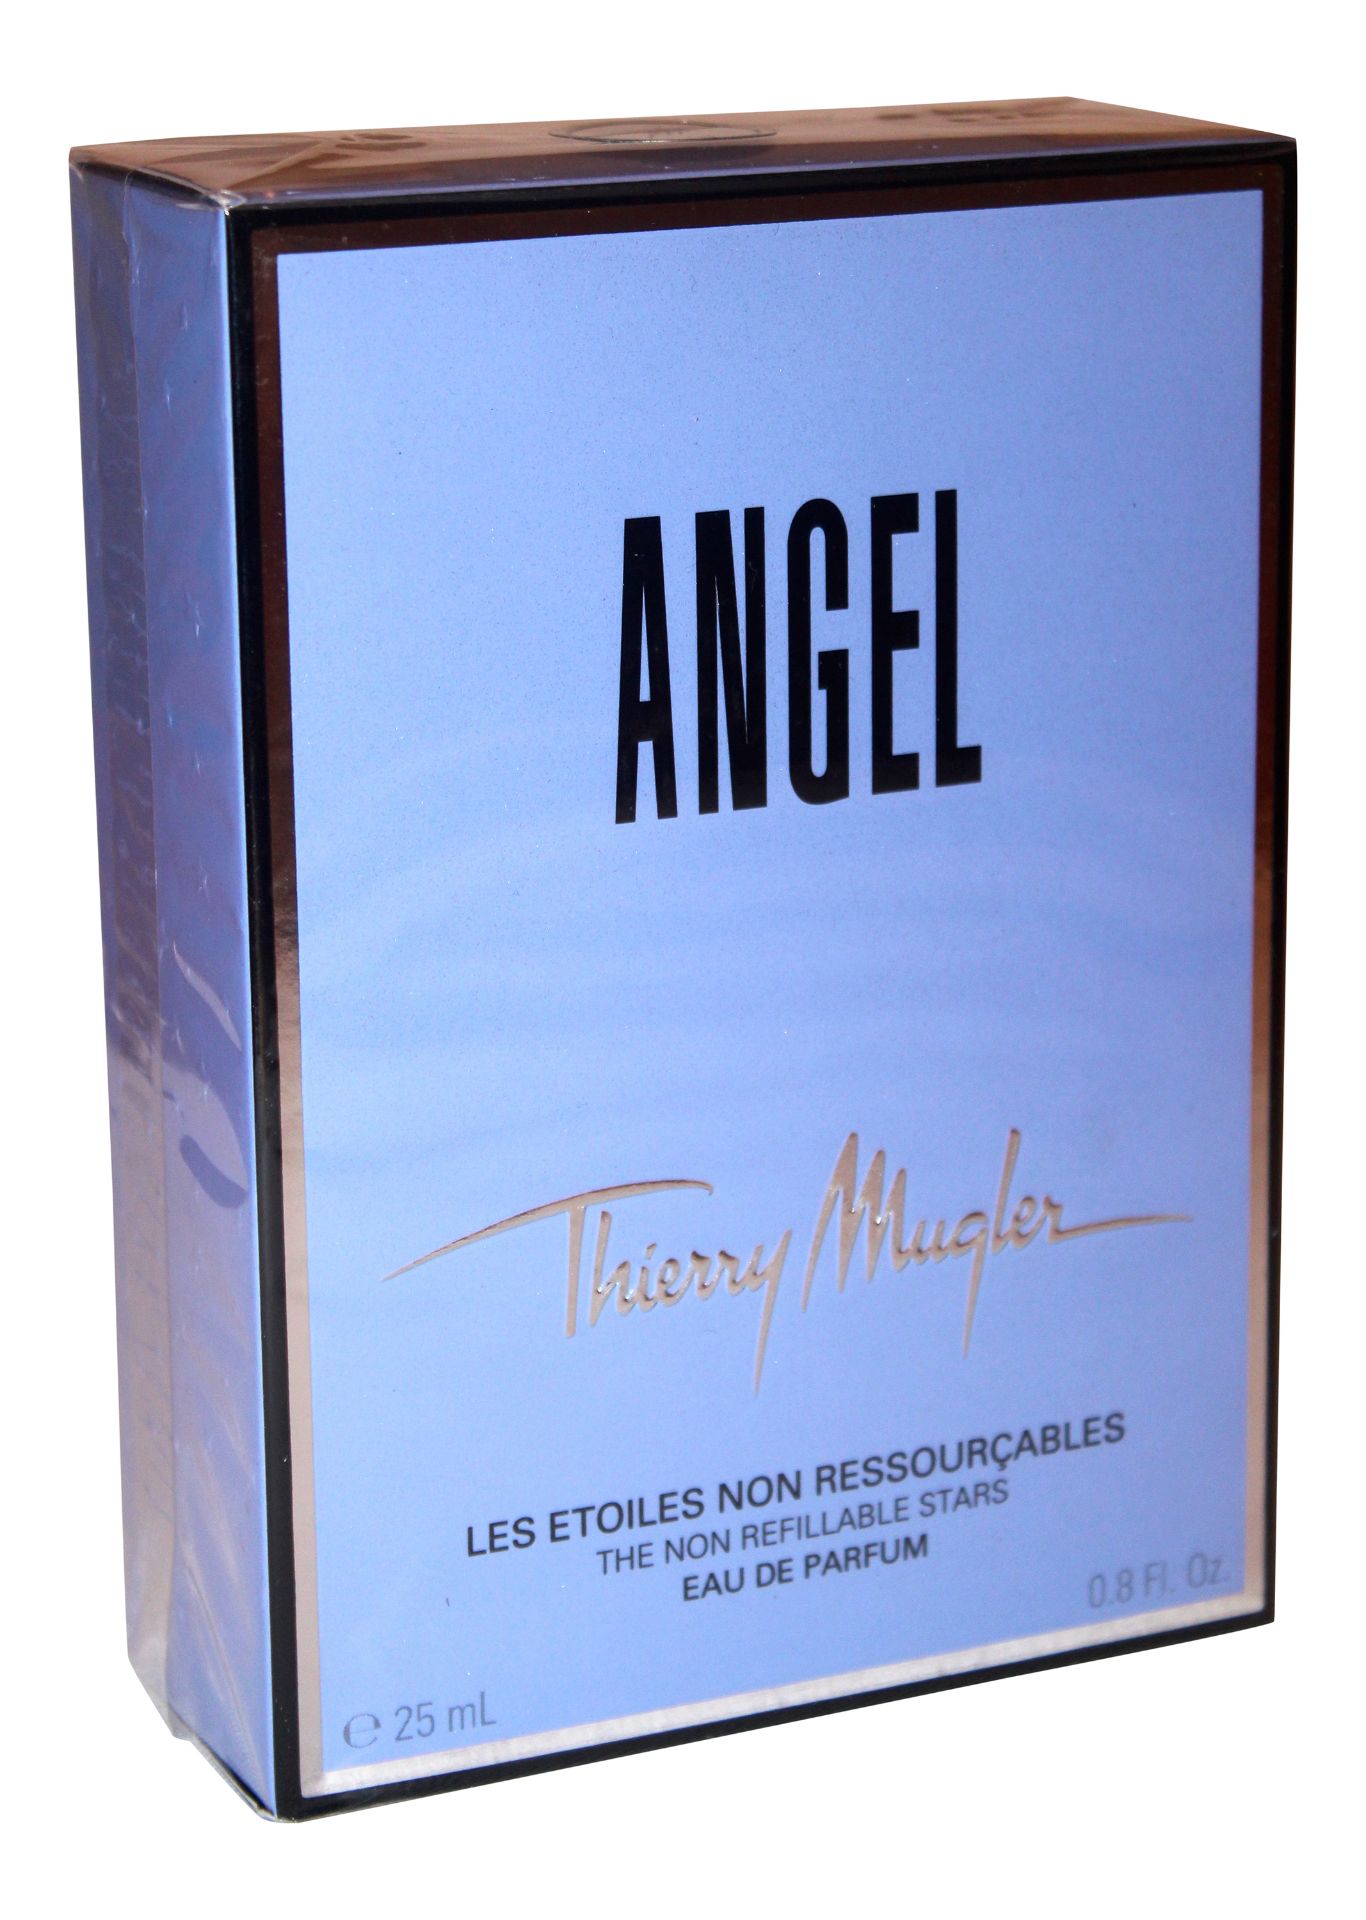 Thierry Mugler Angel EDP 25ml for Women x 1 Unit - Image 2 of 3